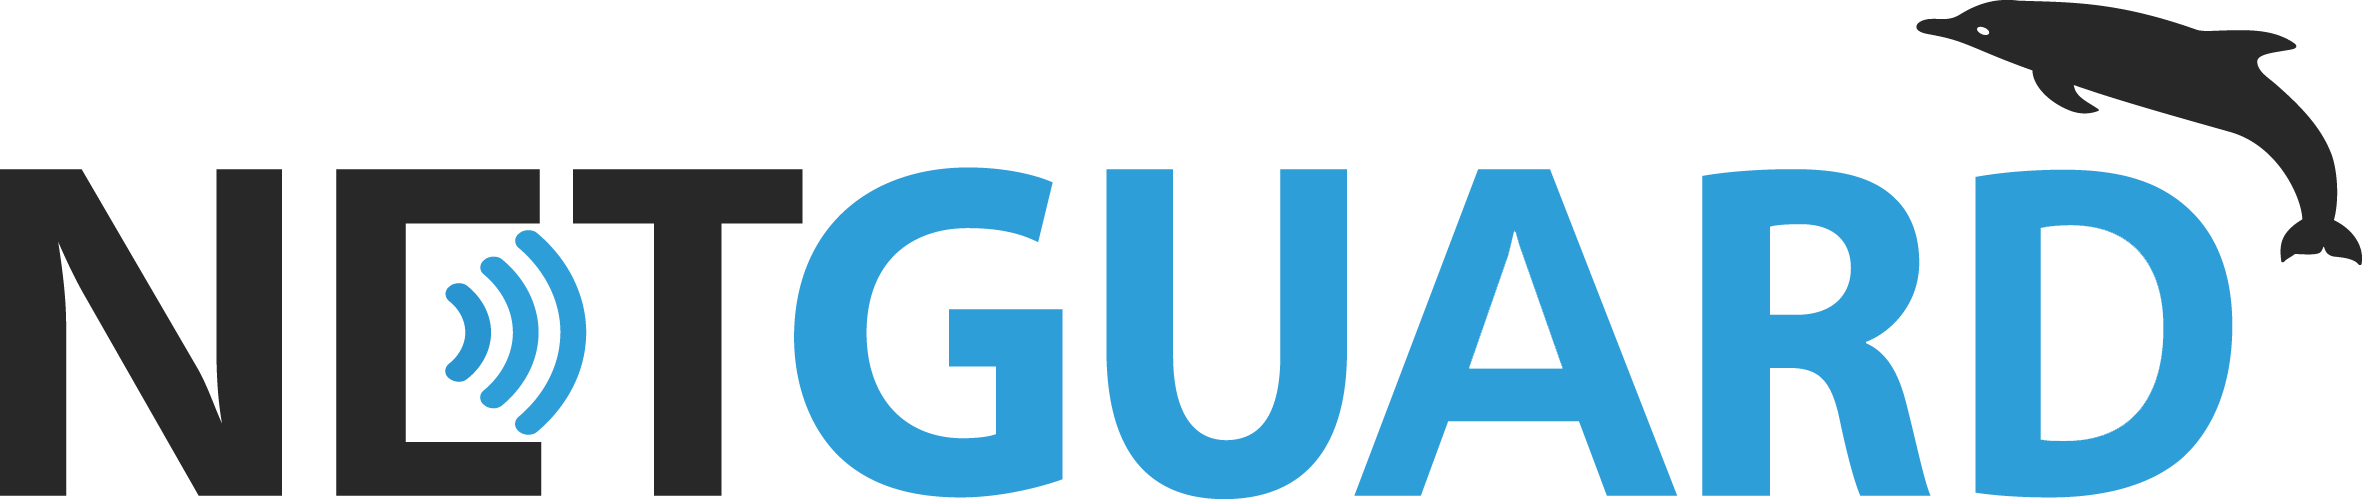 netguard logo